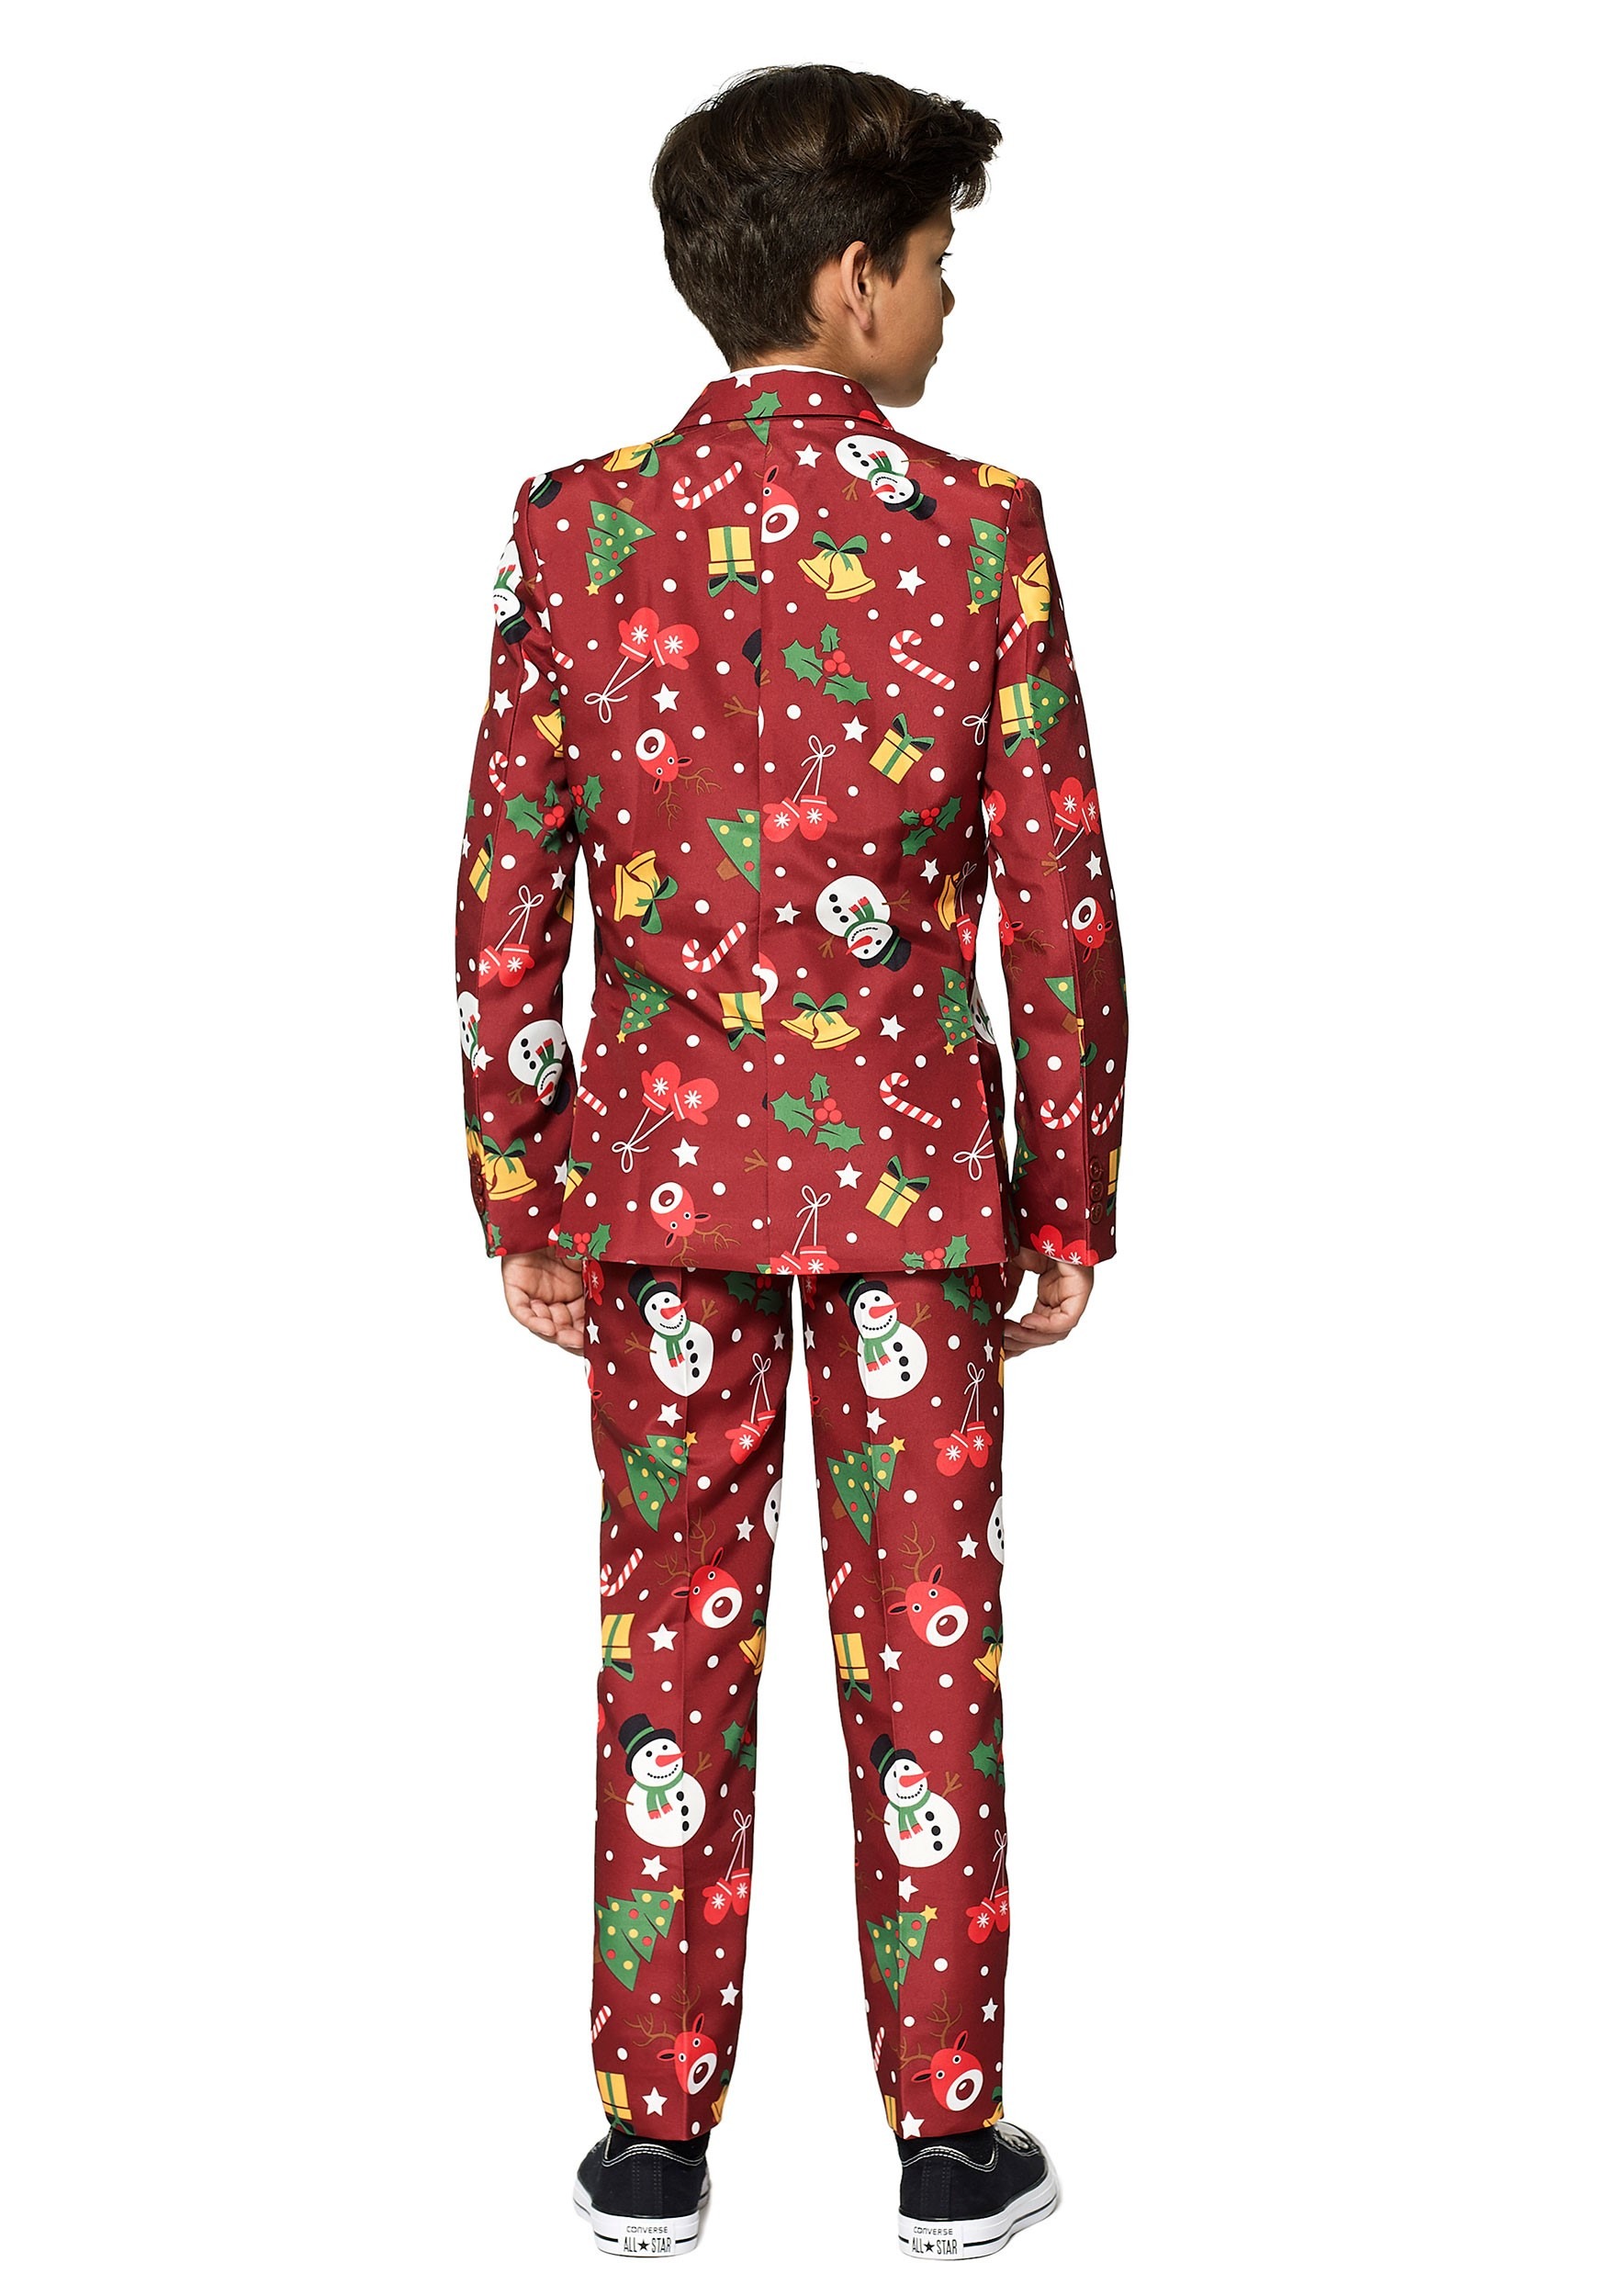 Mens Christmas Suitmeister Suit Xmas Party Festive Funny Fancy Dress Light Up